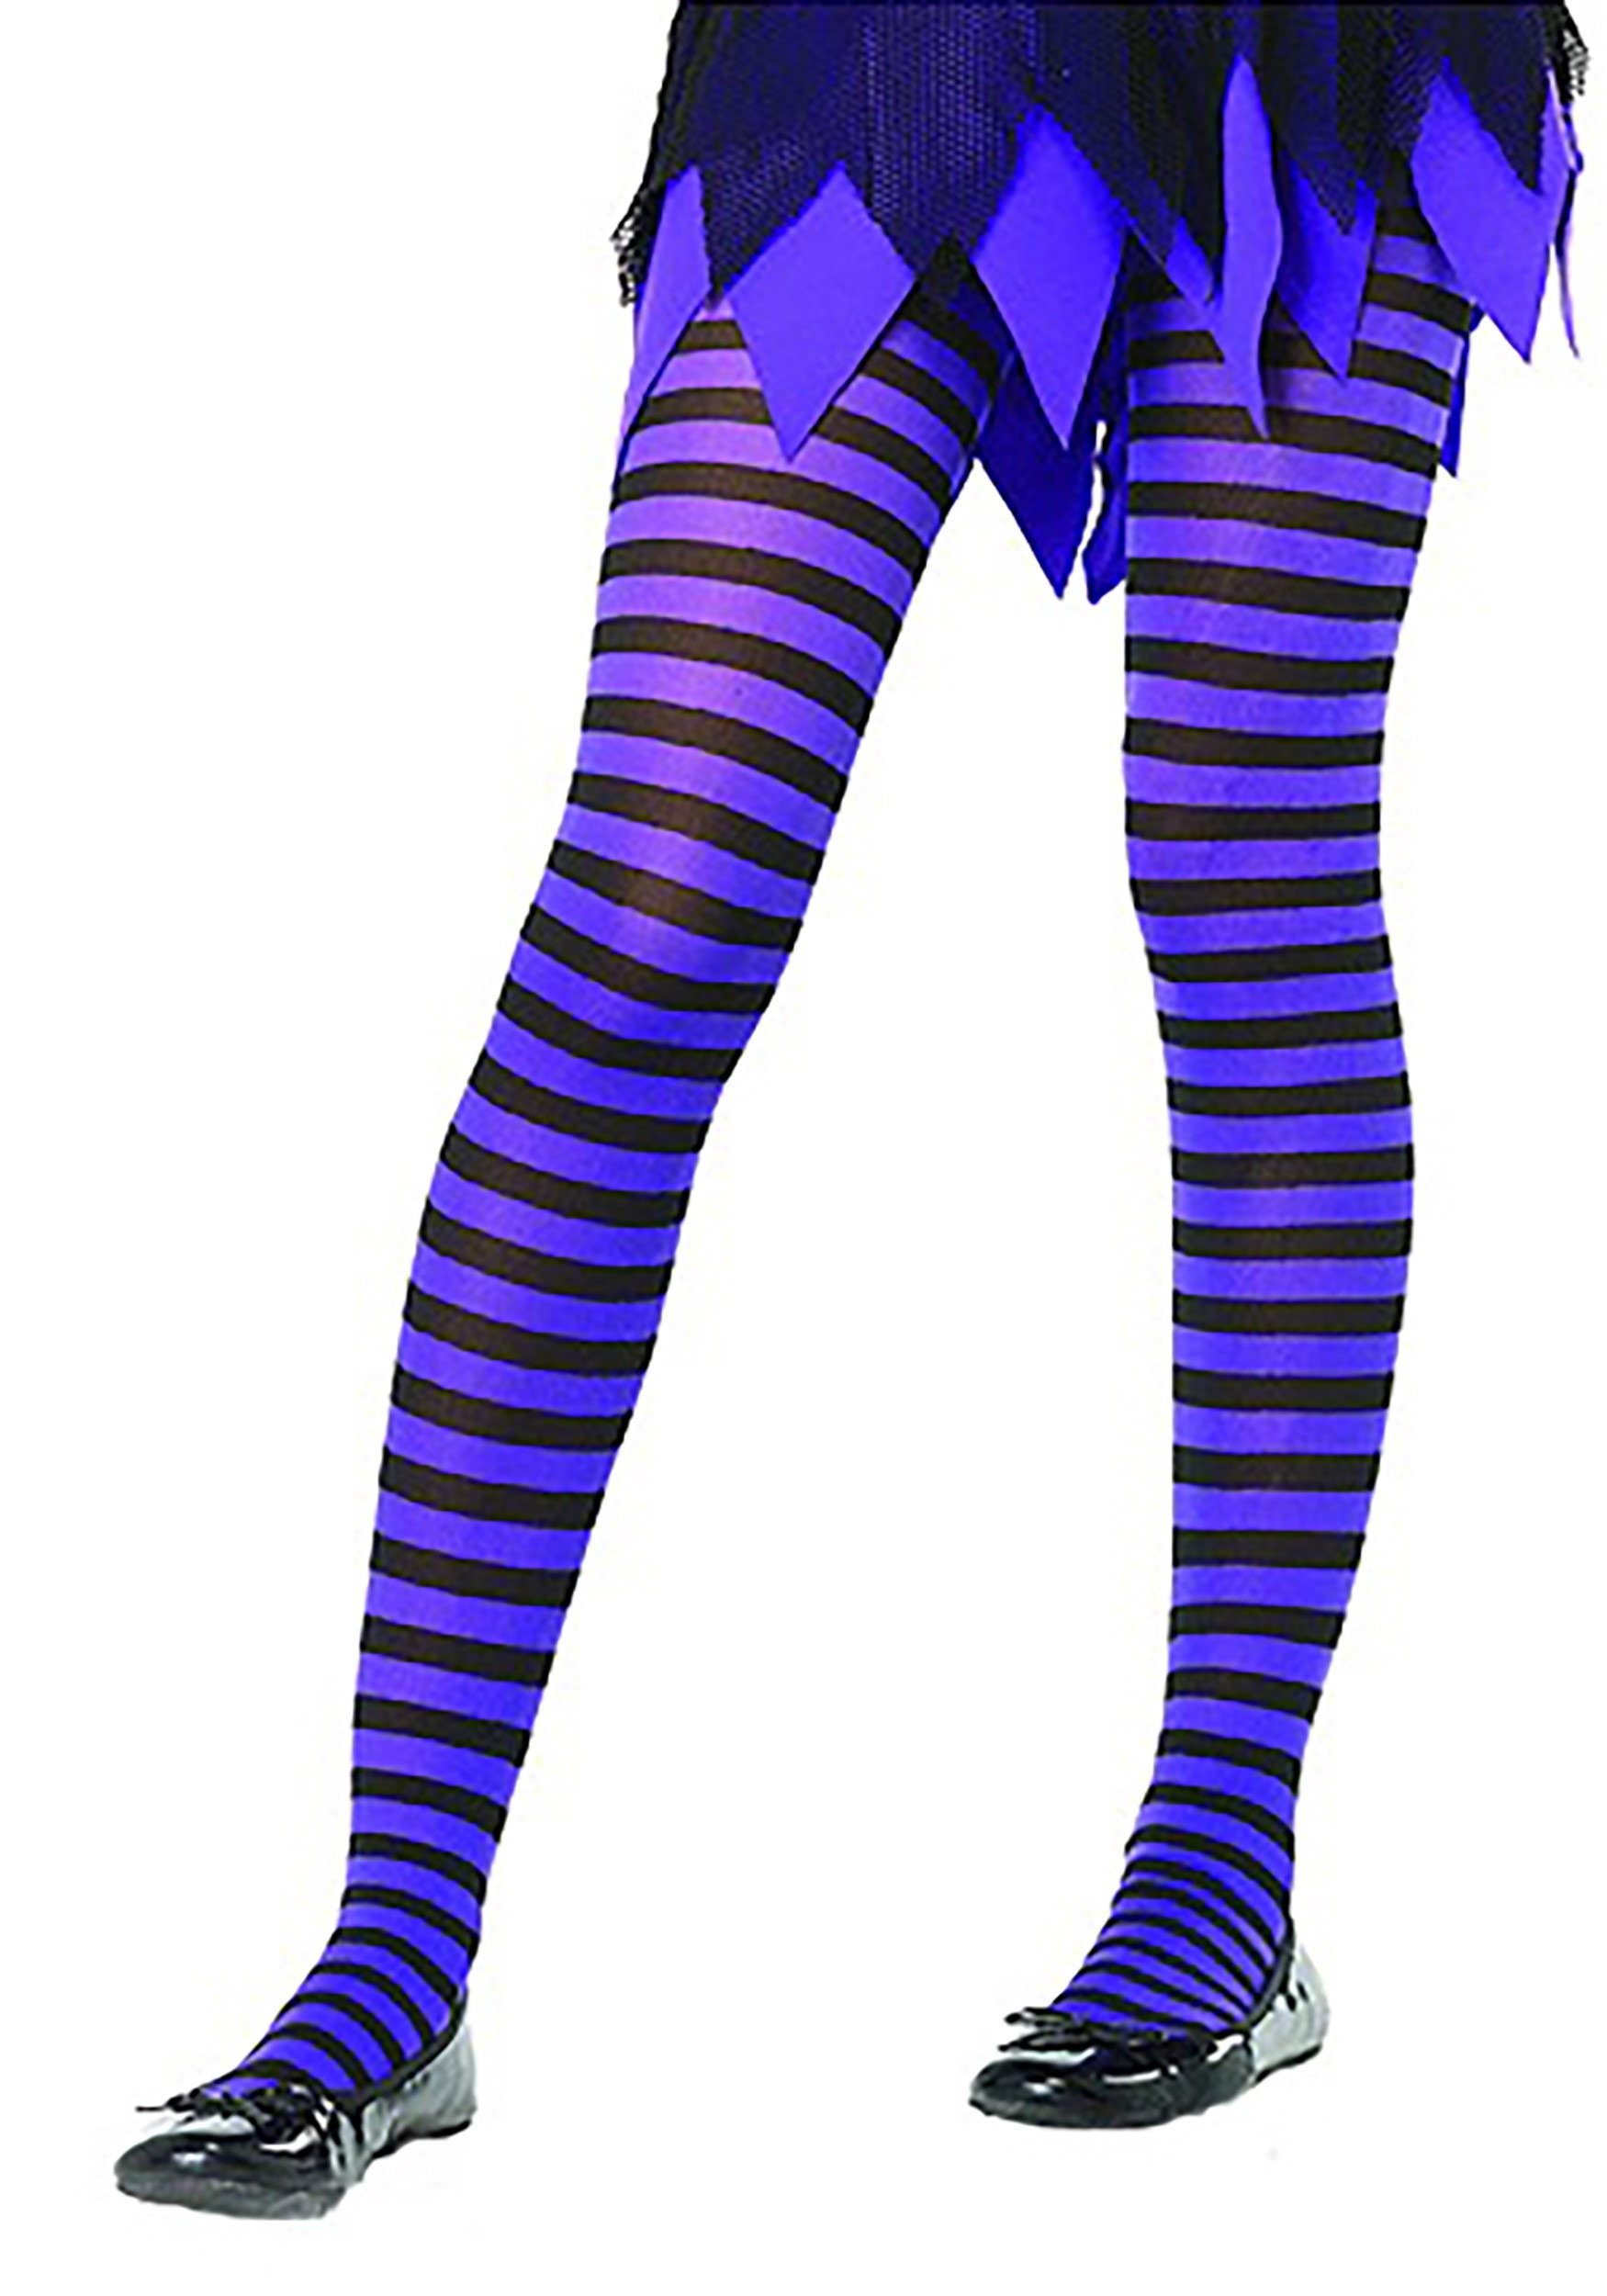 Kids Black and Purple Striped Tights. black and purple striped leggings. 